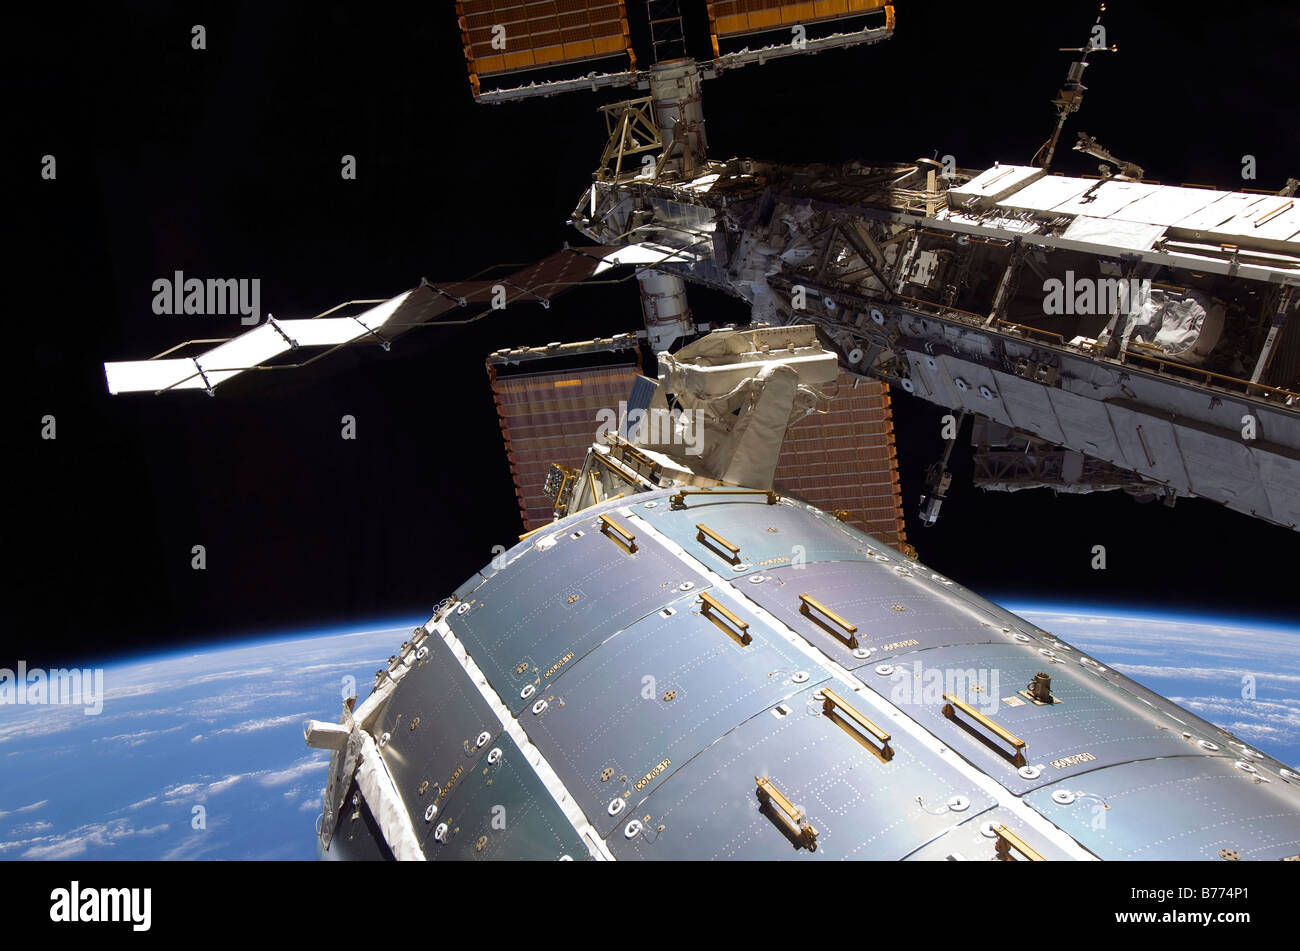 Astronaut participates in extravehicular activity. Stock Photo